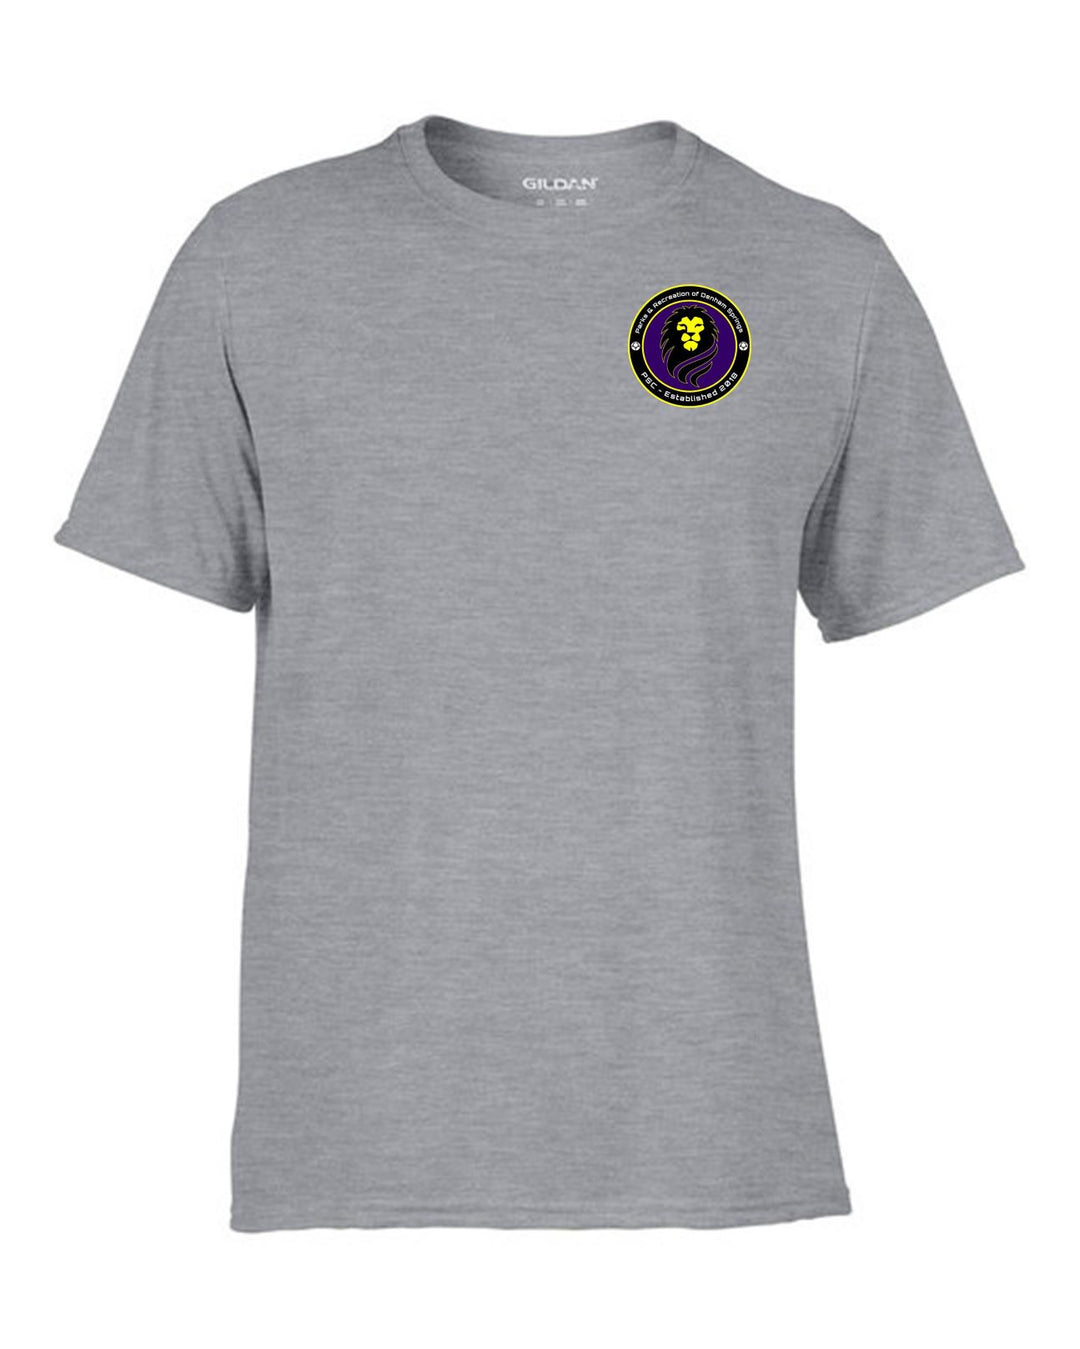 PARDS Short-Sleeve T-Shirt PARDS 2325 Sport Grey Youth Medium - Third Coast Soccer